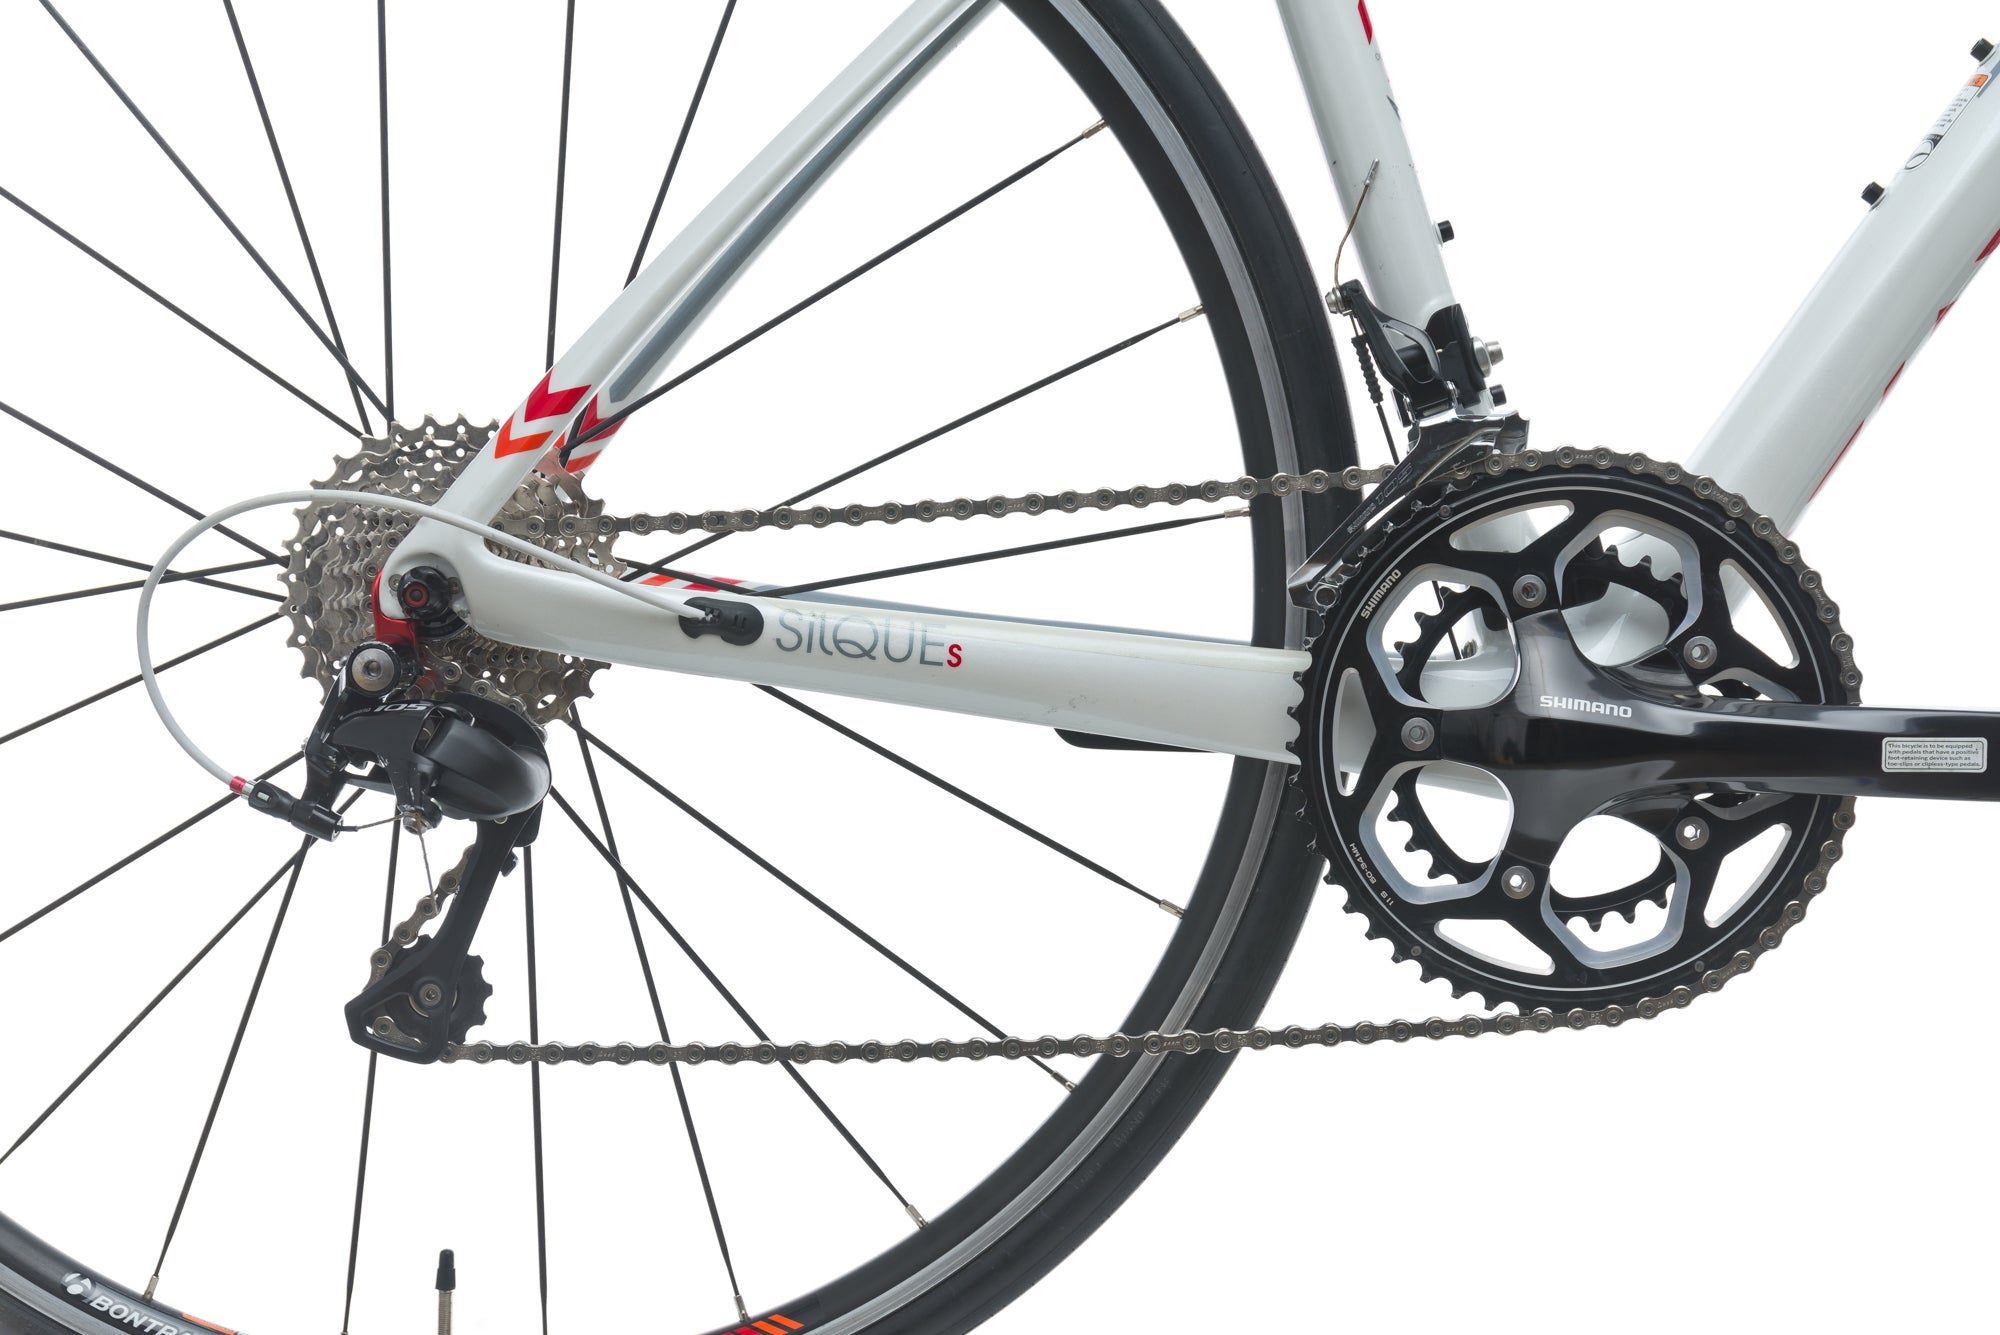 Trek Silque S Compact 50cm Bike - 2015 sticker